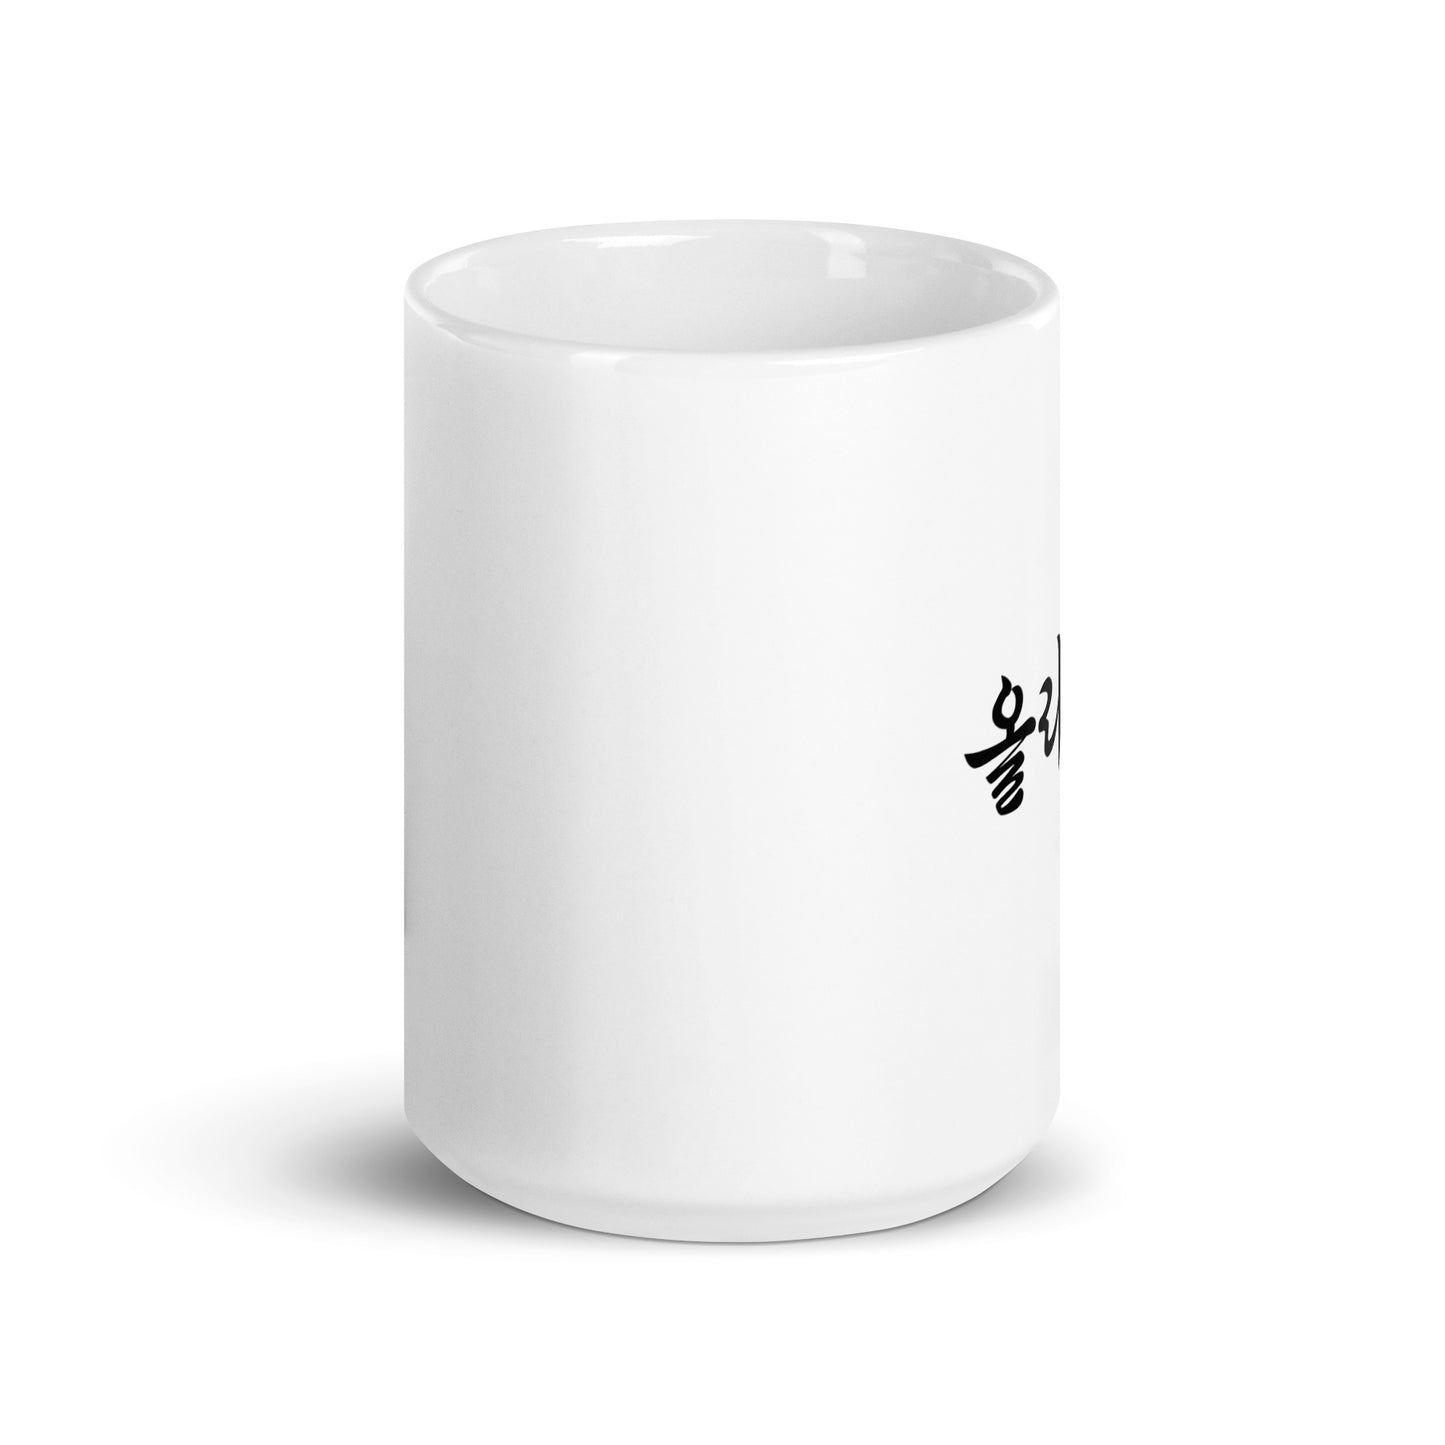 Olivia in Hangul Custom Name Gift Ceramic Mug